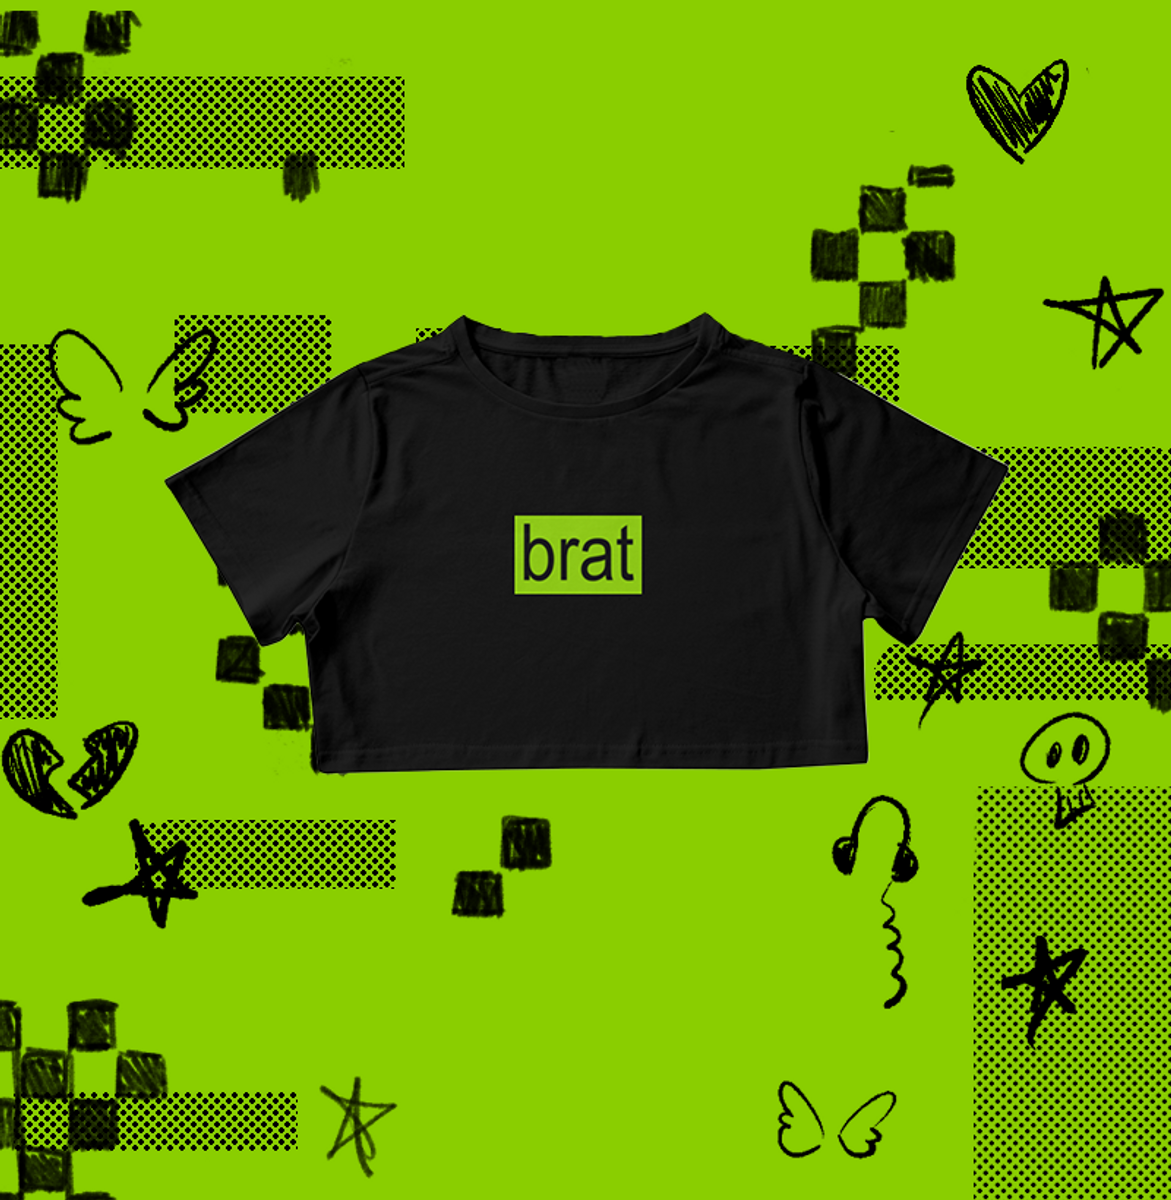 Nome do produto: Cropped Charli XCX - brat